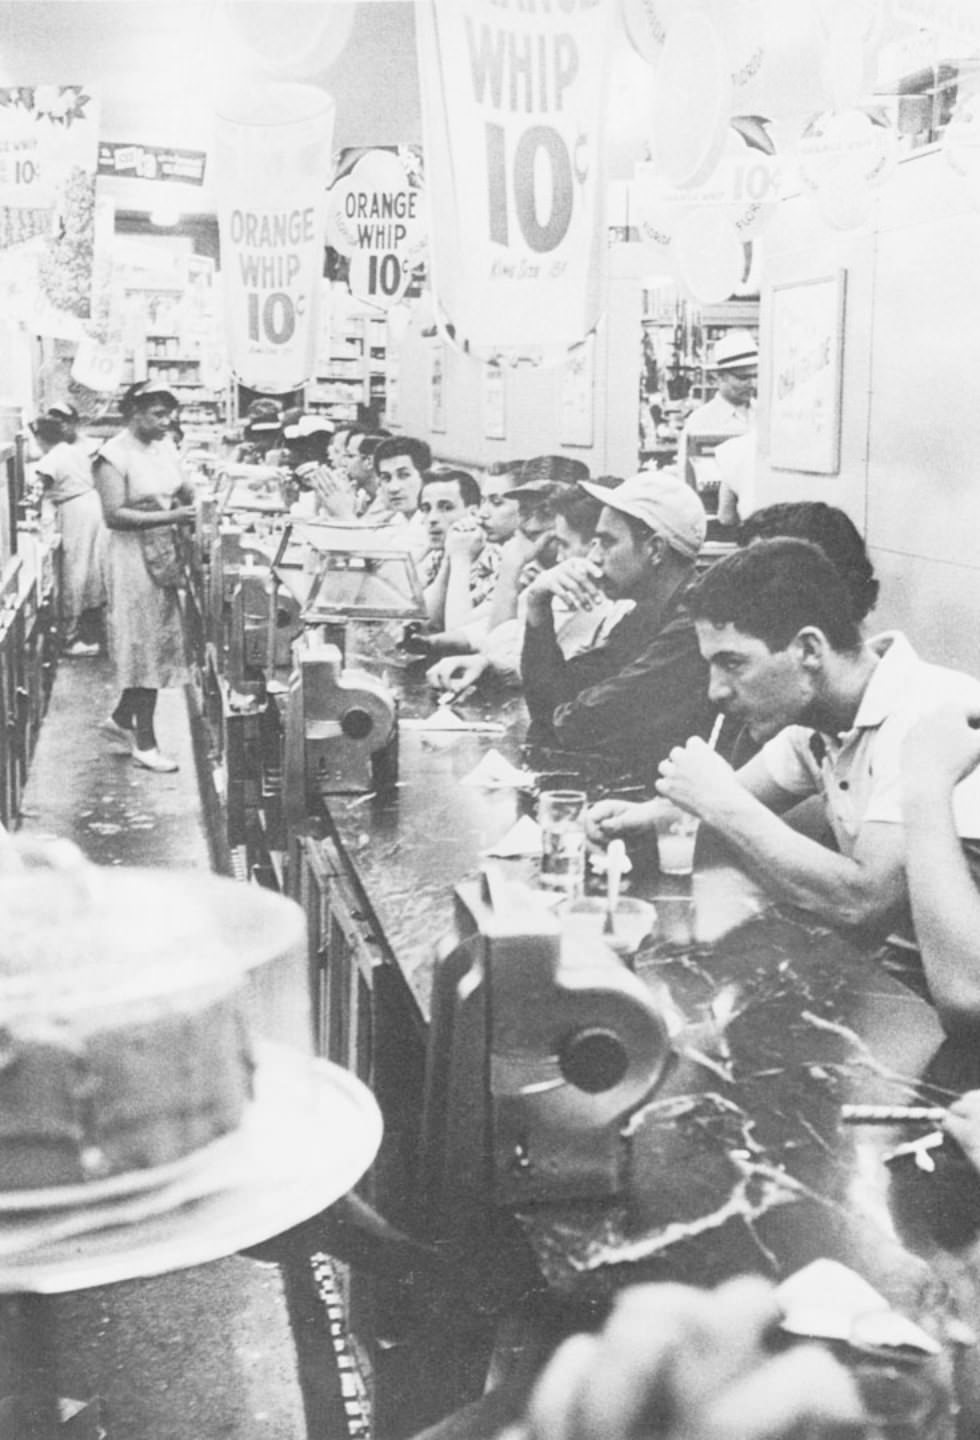 Drug store in Detroit, 1955